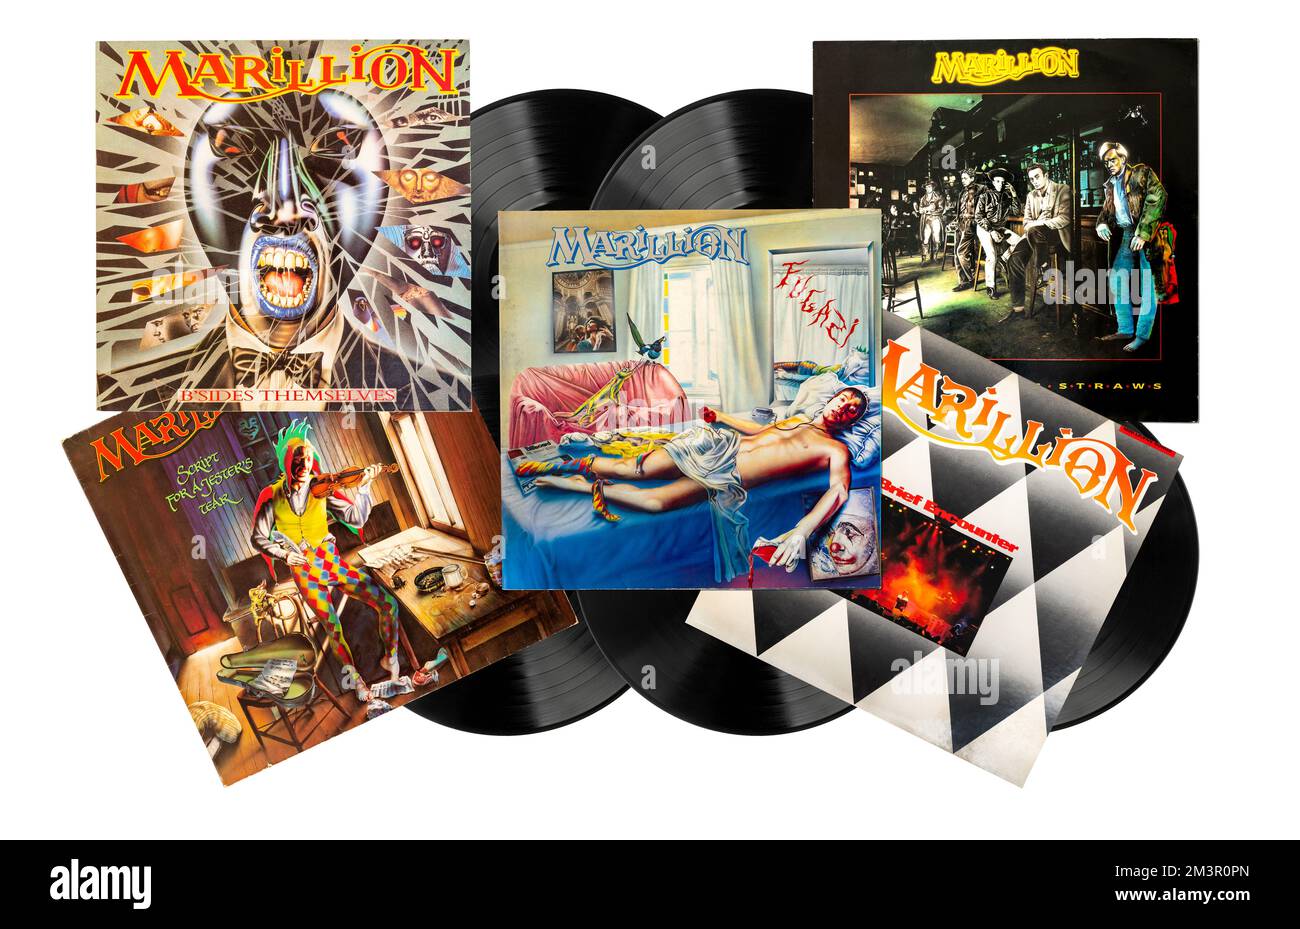 Marillion-Alben - Original-Vinyl-Albumcovers - Fugazi 1984 , Script For a Jester's Tear Album 1983, B'Sides Themselves Album 1988, Brief encounter and Stock Photo